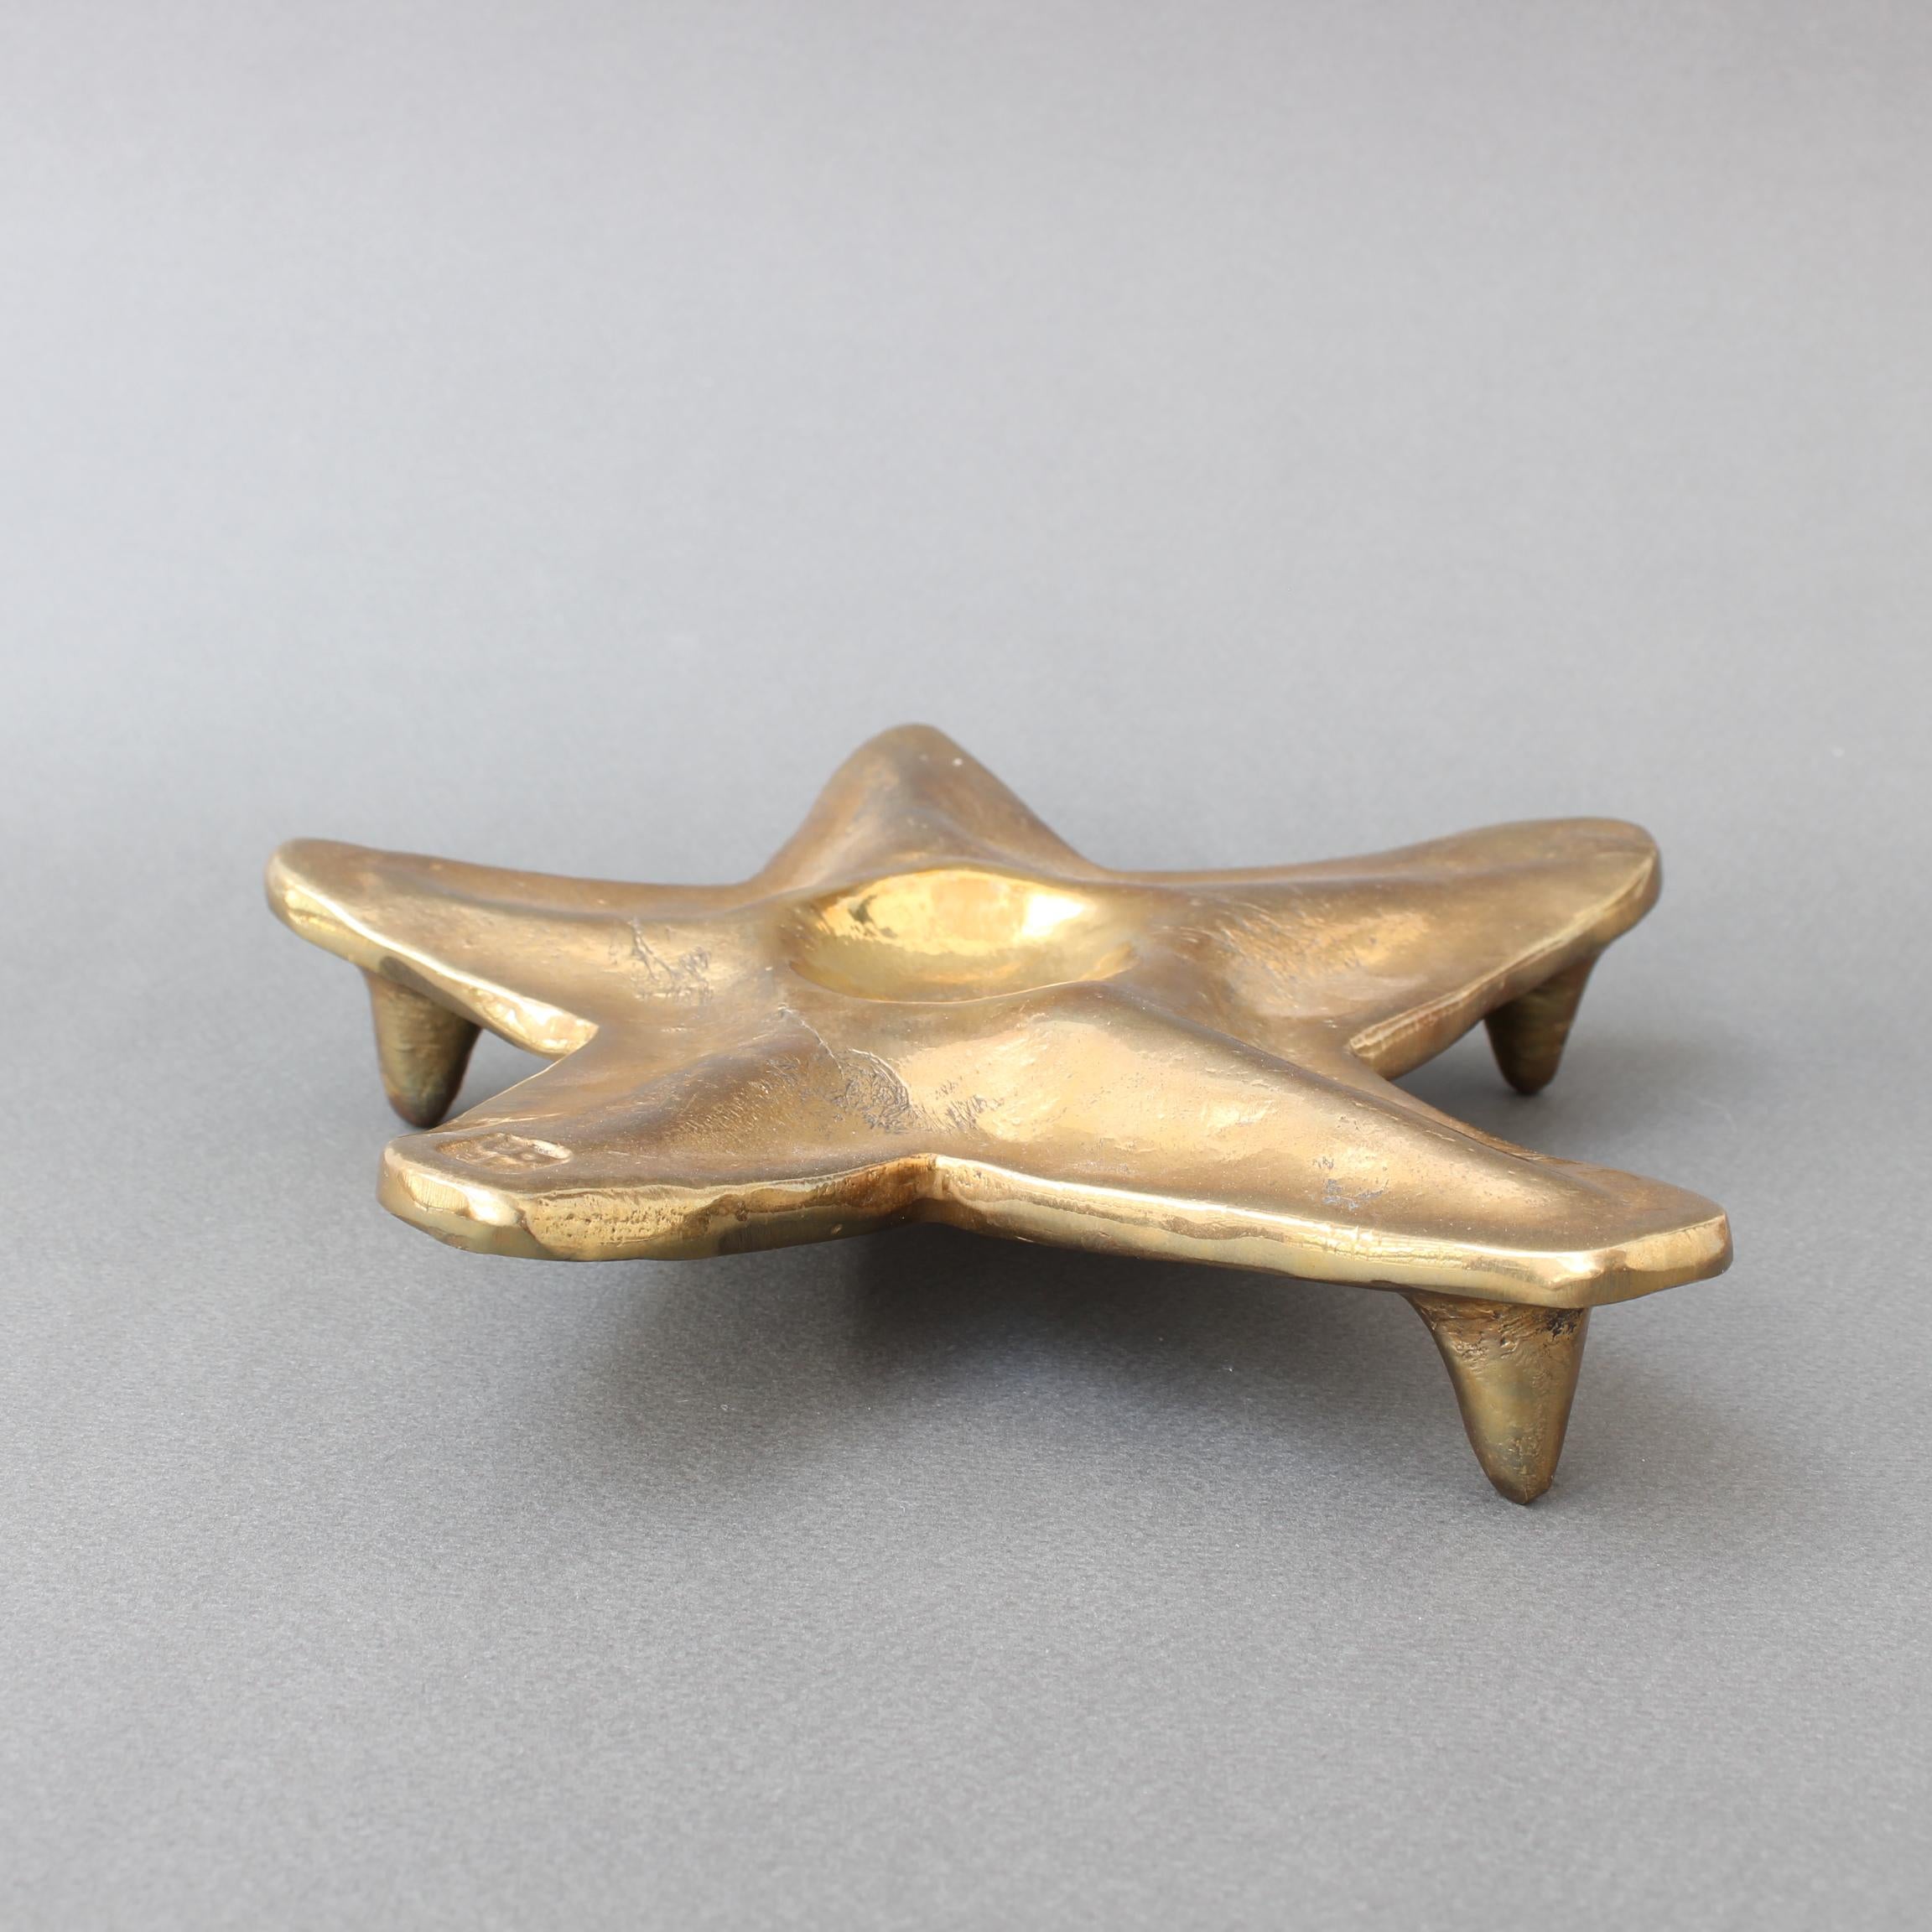 Decorative Brass Trivet in Starfish Motif by David Marshall 'circa 1990s' For Sale 1